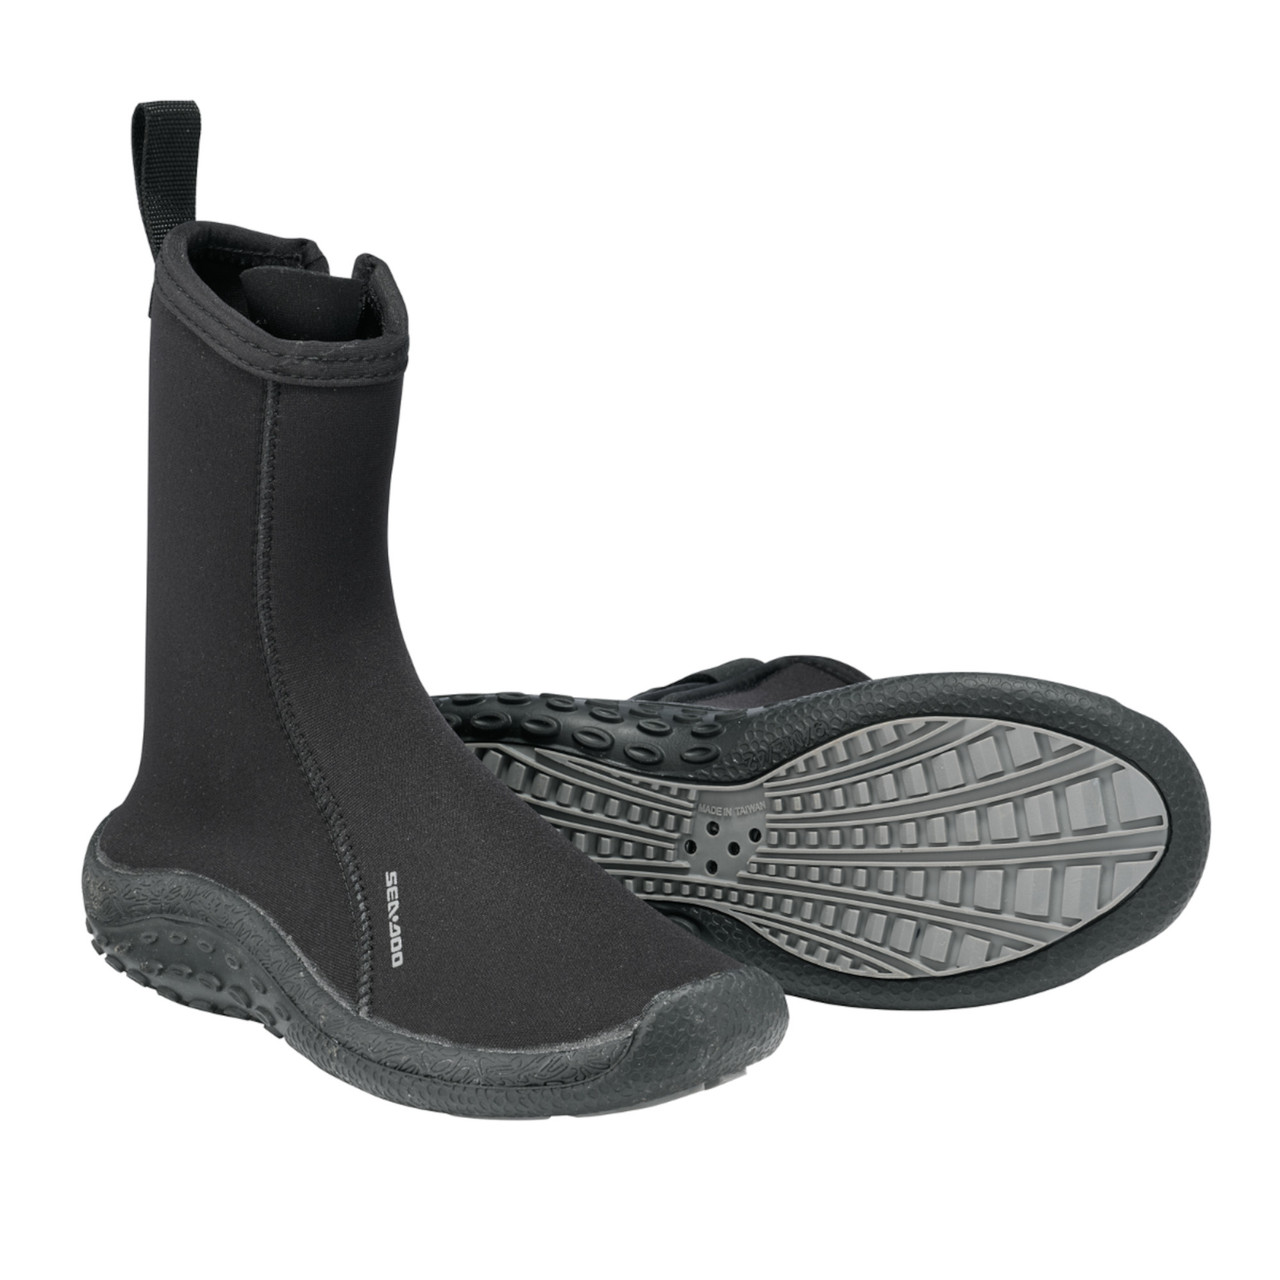 Sea-Doo New OEM, Unisex Onesize Ankle Guarding Neoprene Boots, 4442622890